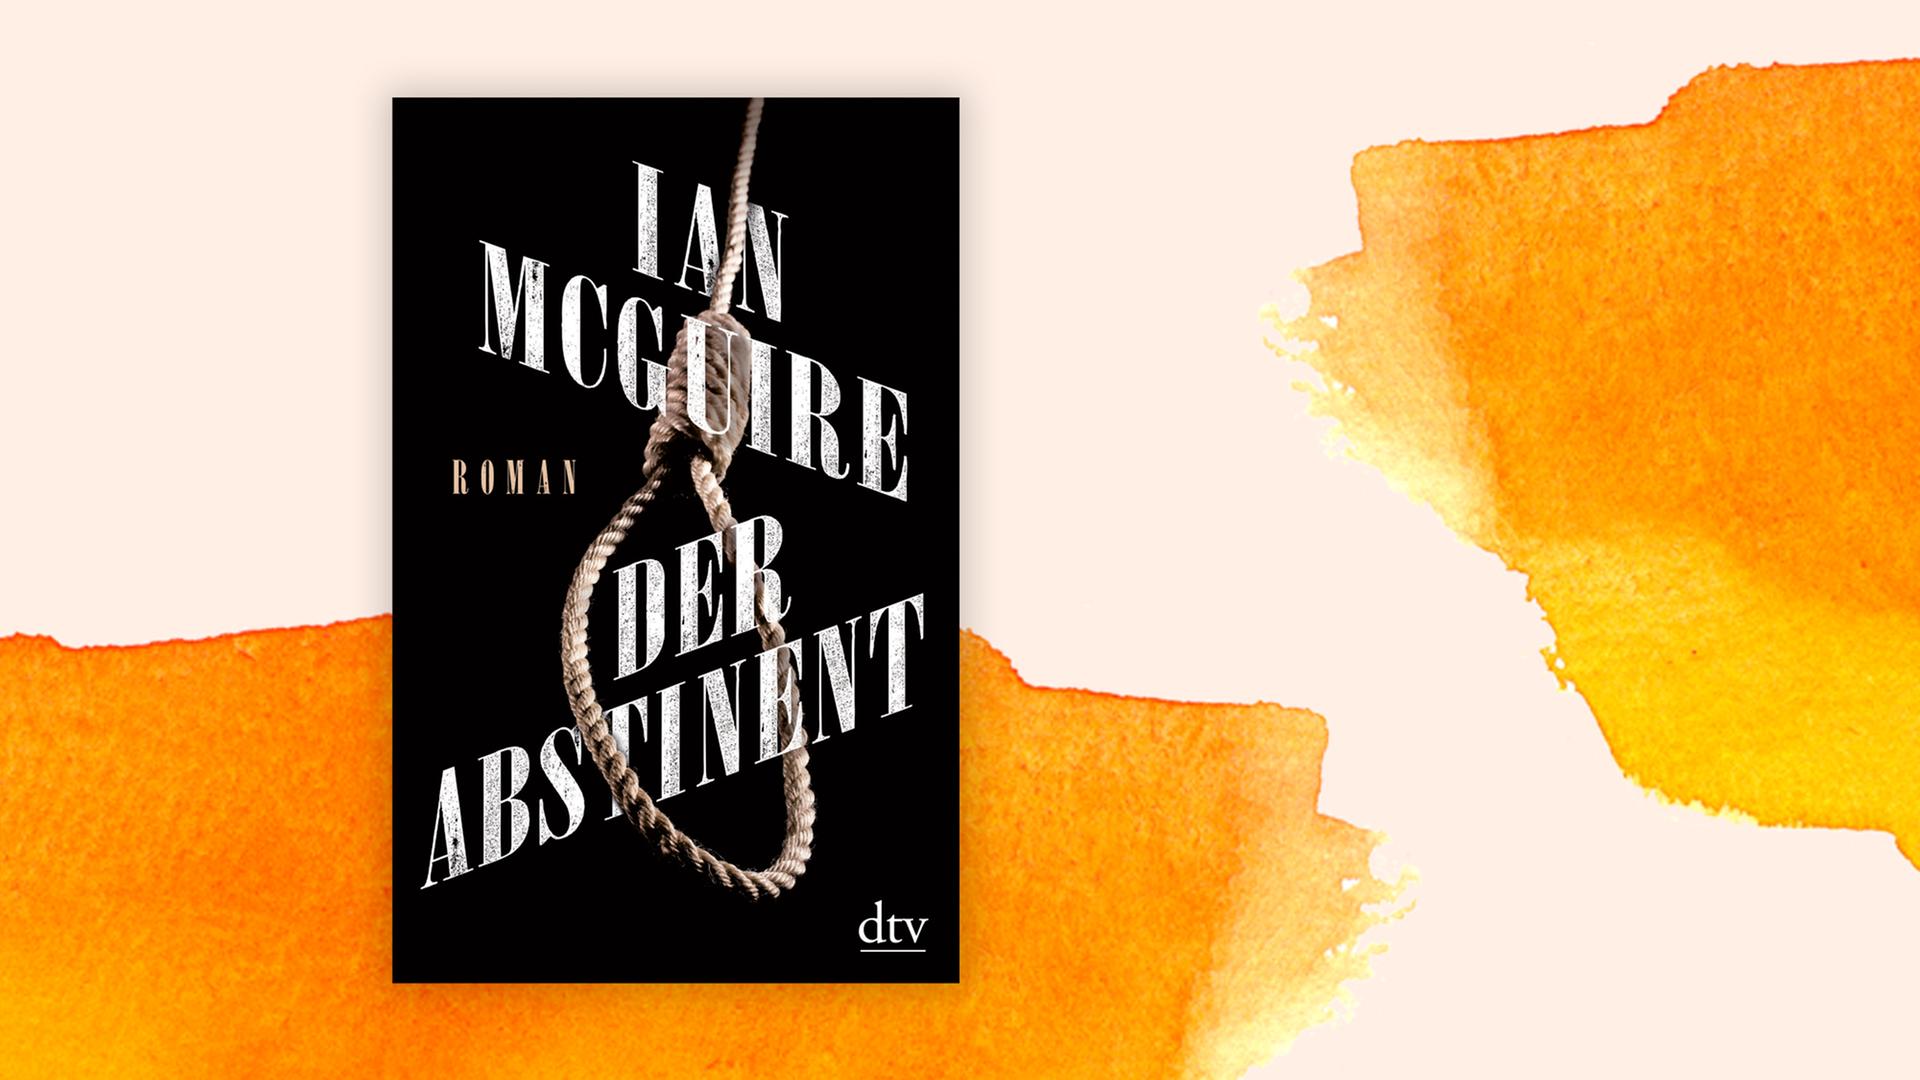 Buchcover Ian McGuire "Der Abstinent"